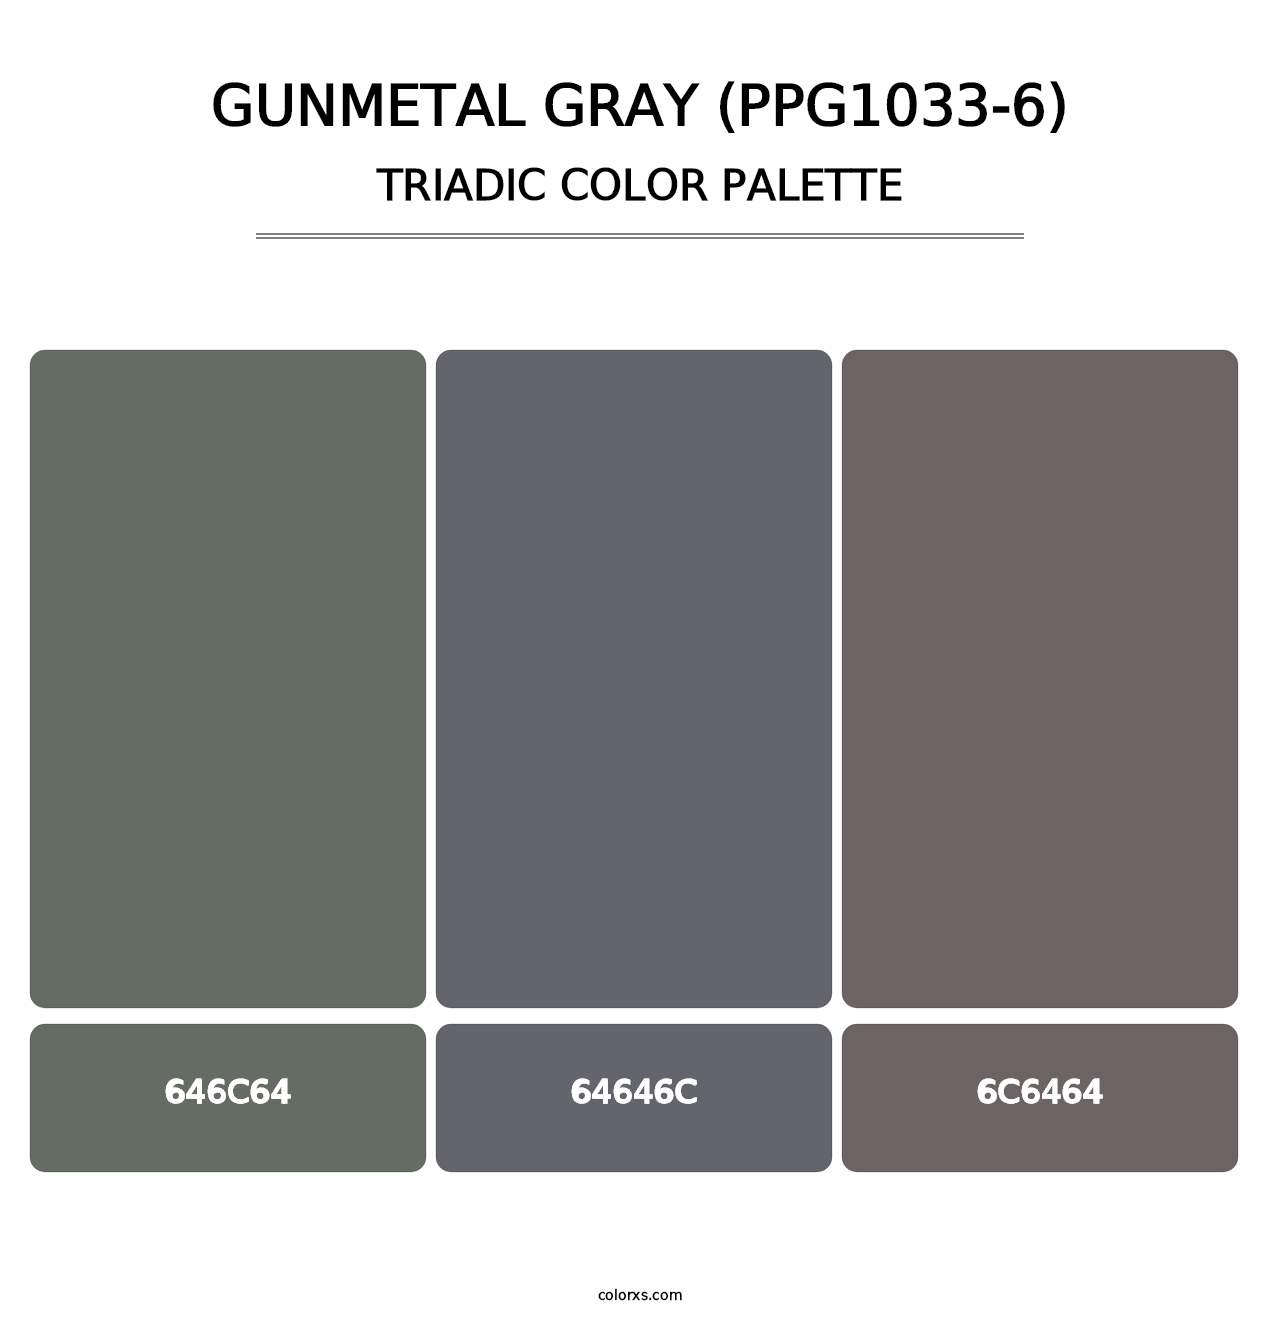 Gunmetal Gray (PPG1033-6) - Triadic Color Palette